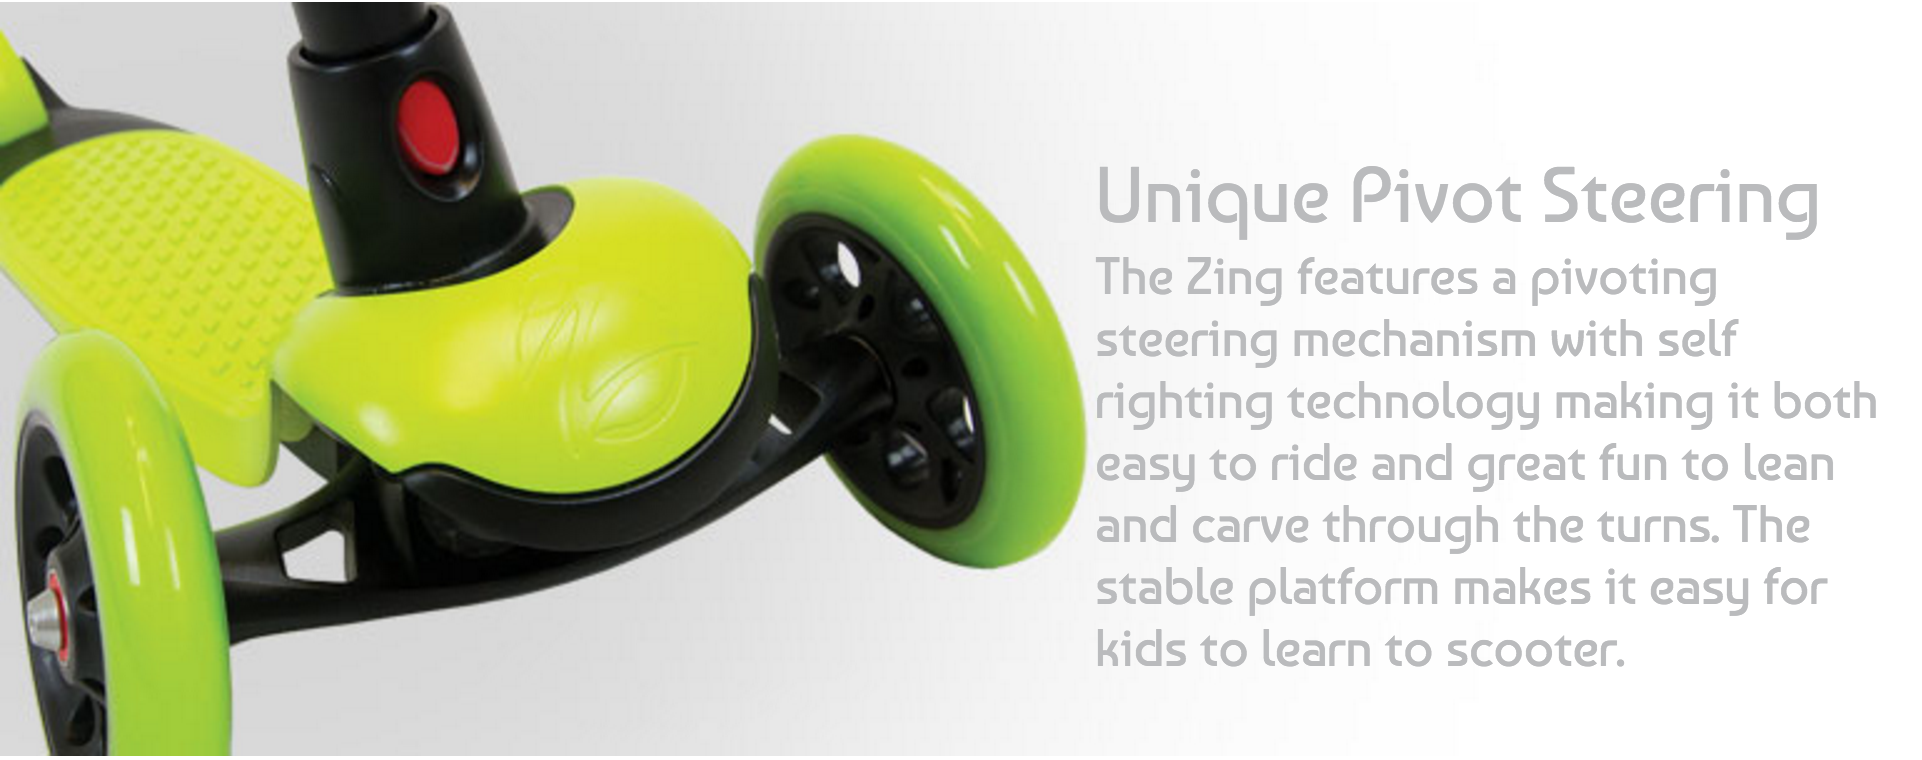 Zycom Zing 3 Wheel Kick Scooter for children Feature 1